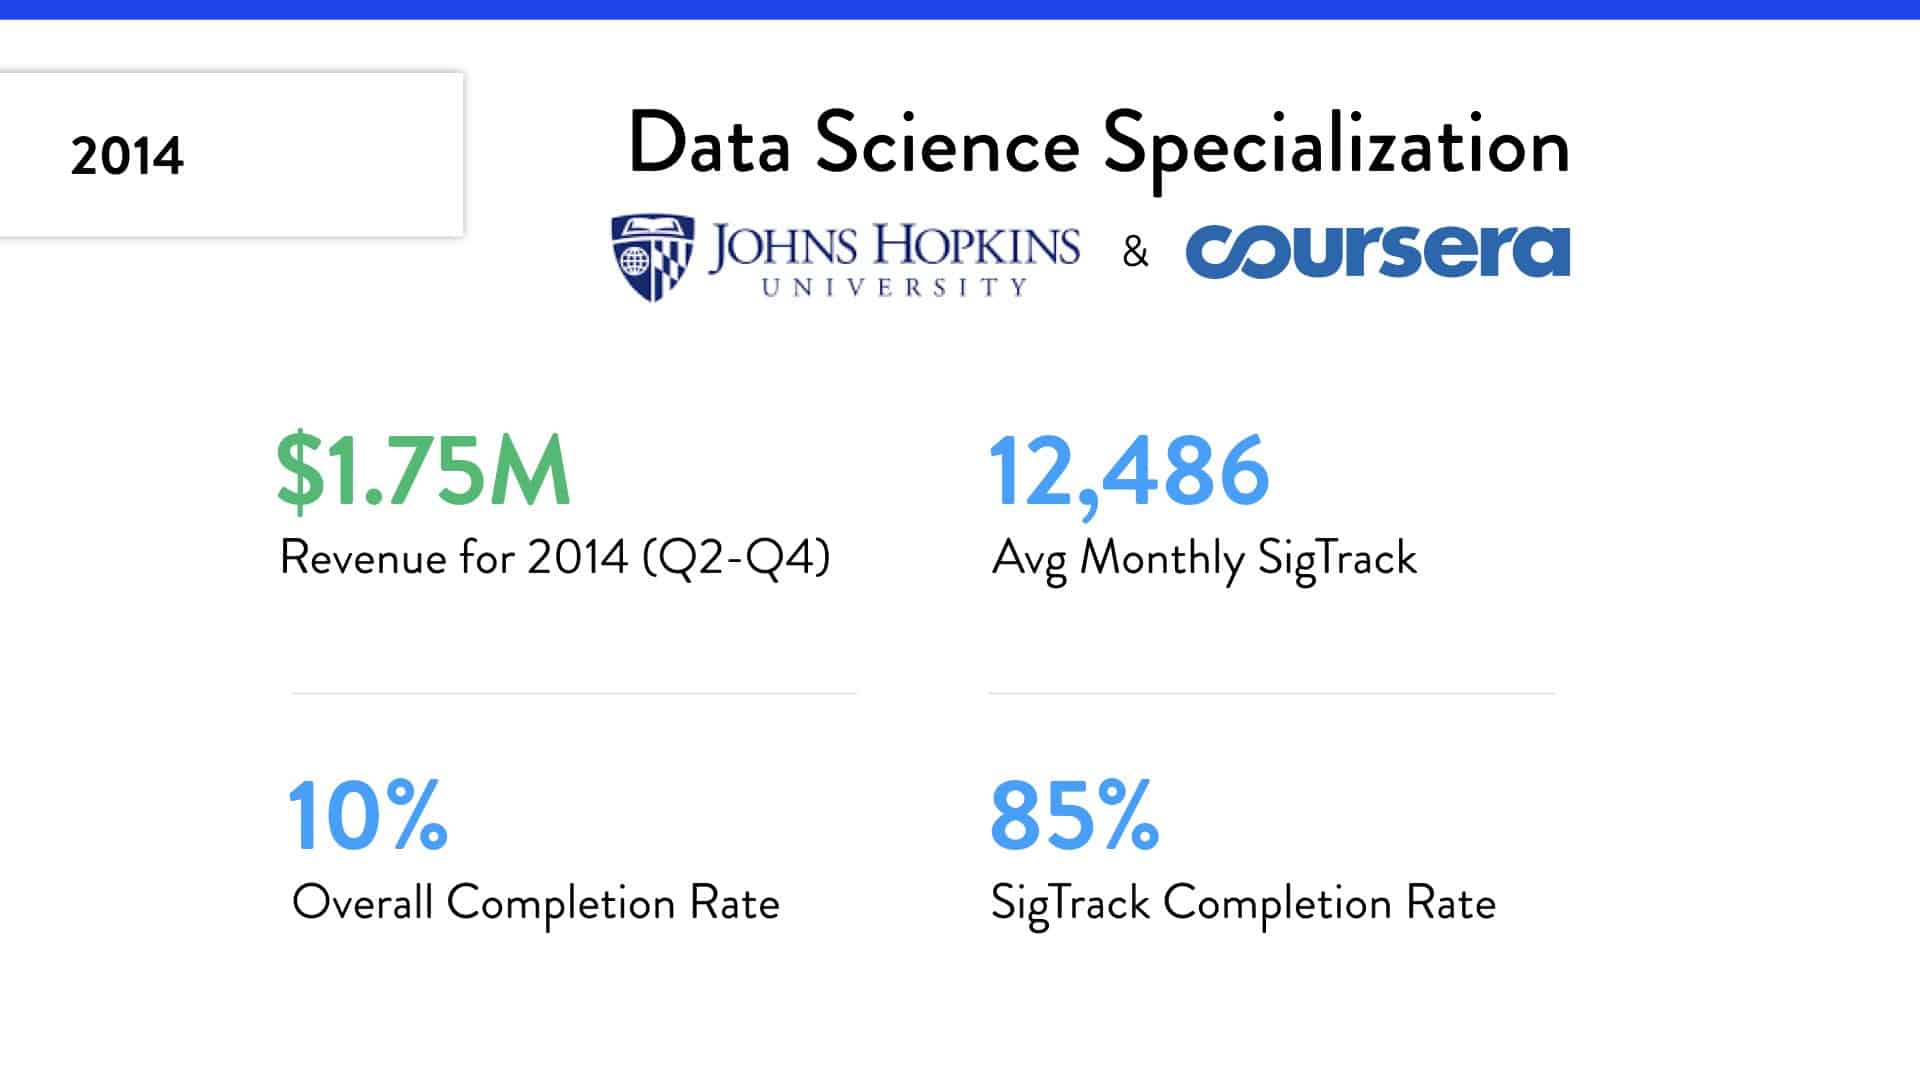 Data Science Specialization revenue